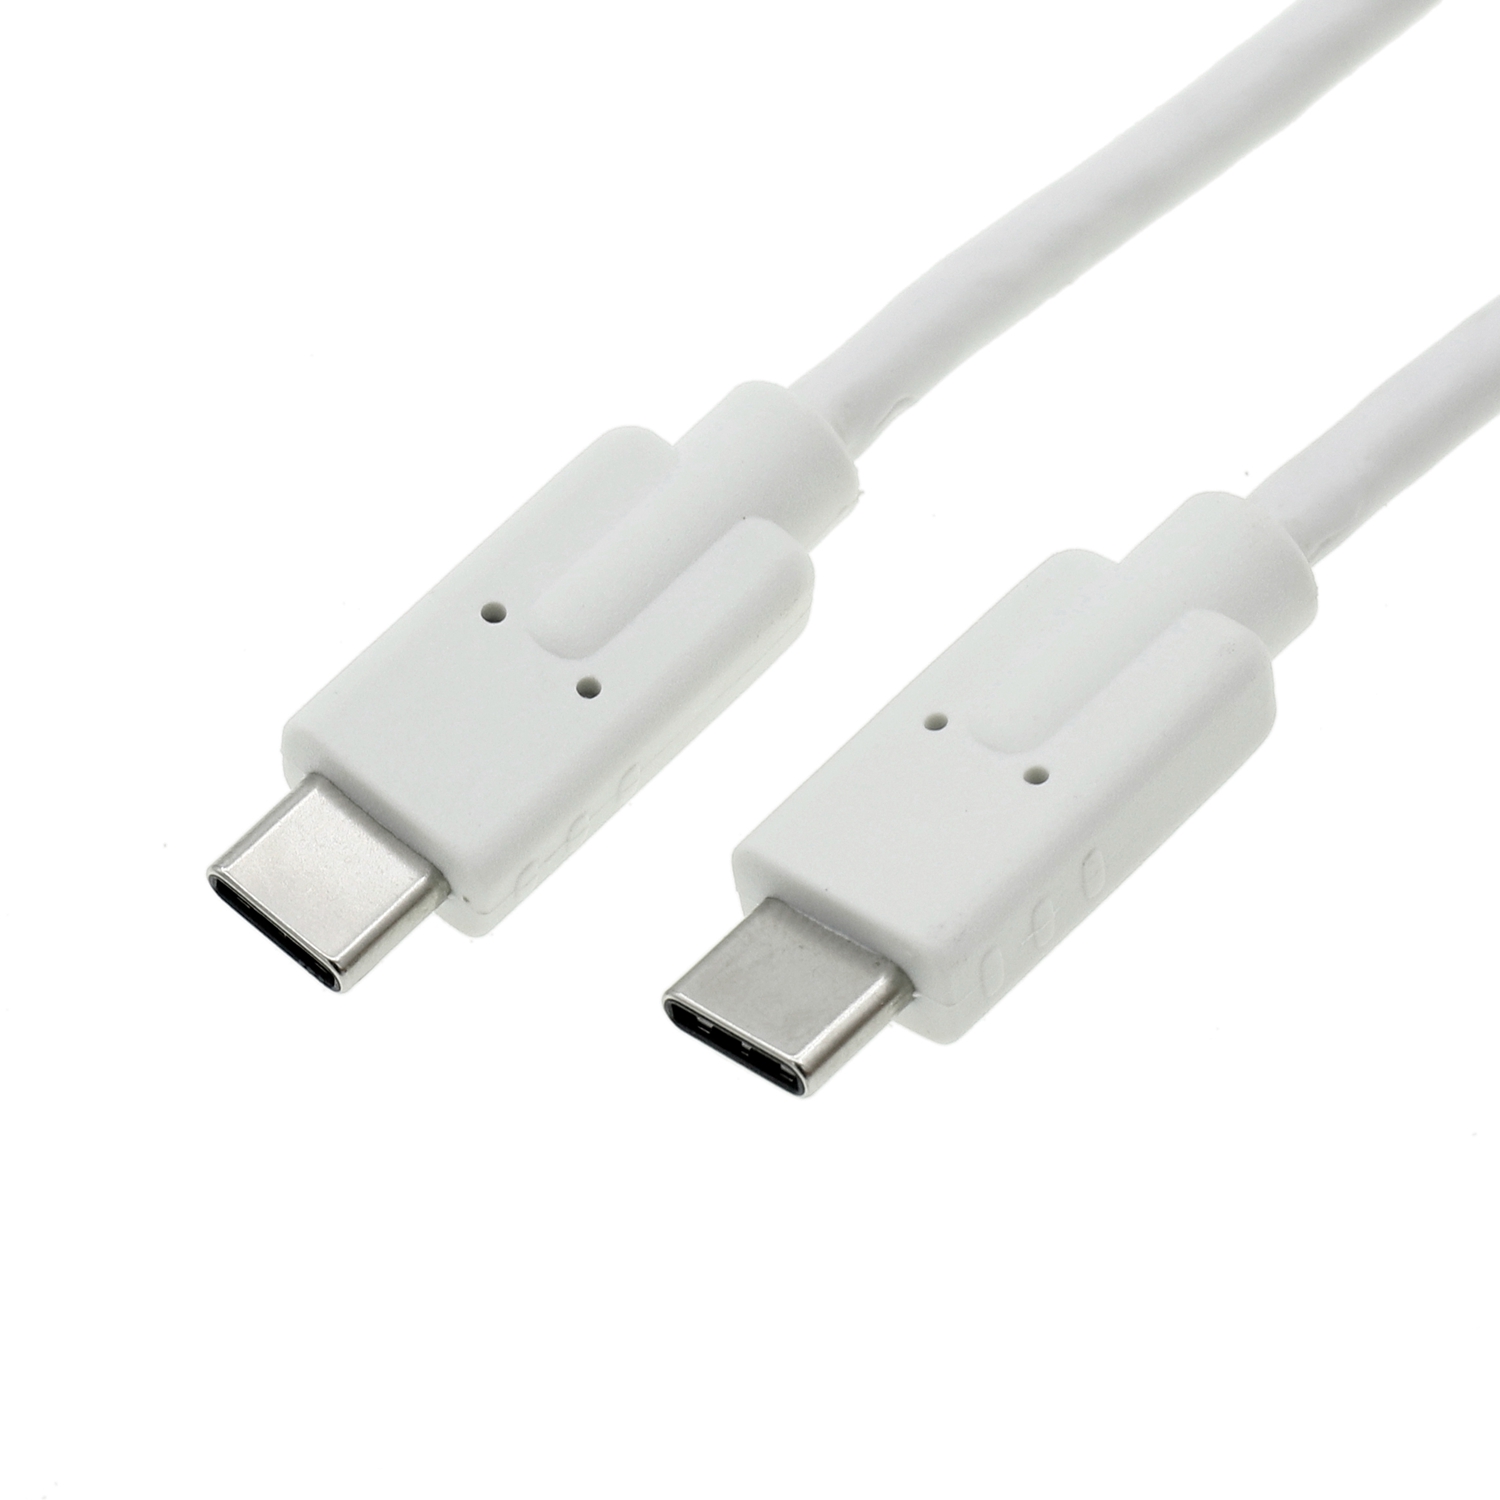 Cable de extensión USB C a C Datos Cable de sincronización Entrega de alimentación de alimentación OEM 